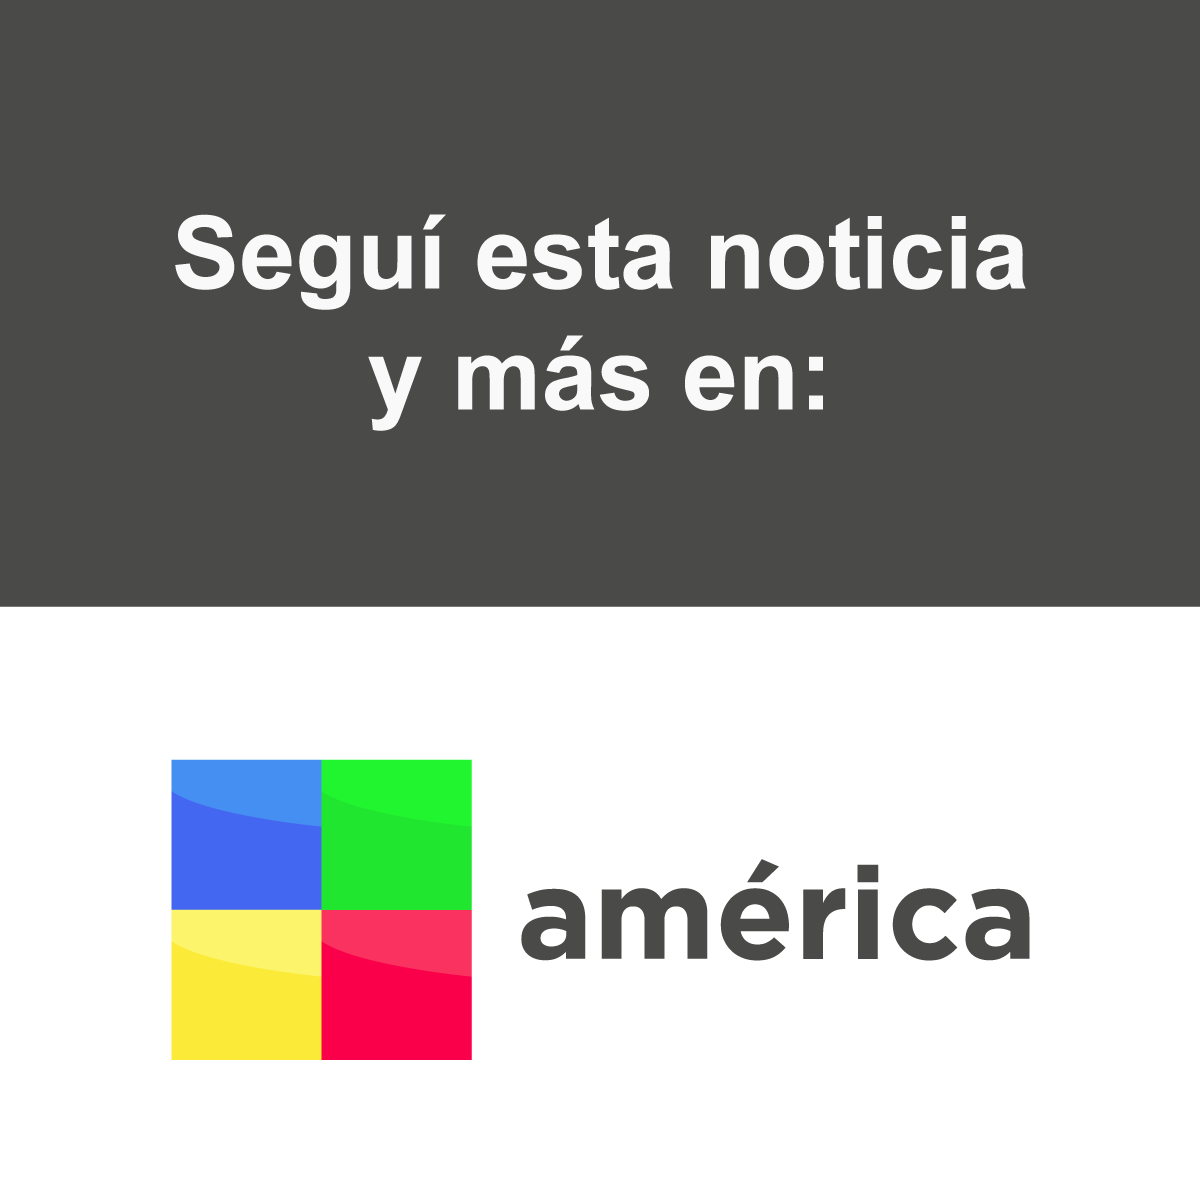 (c) Americatv.com.ar